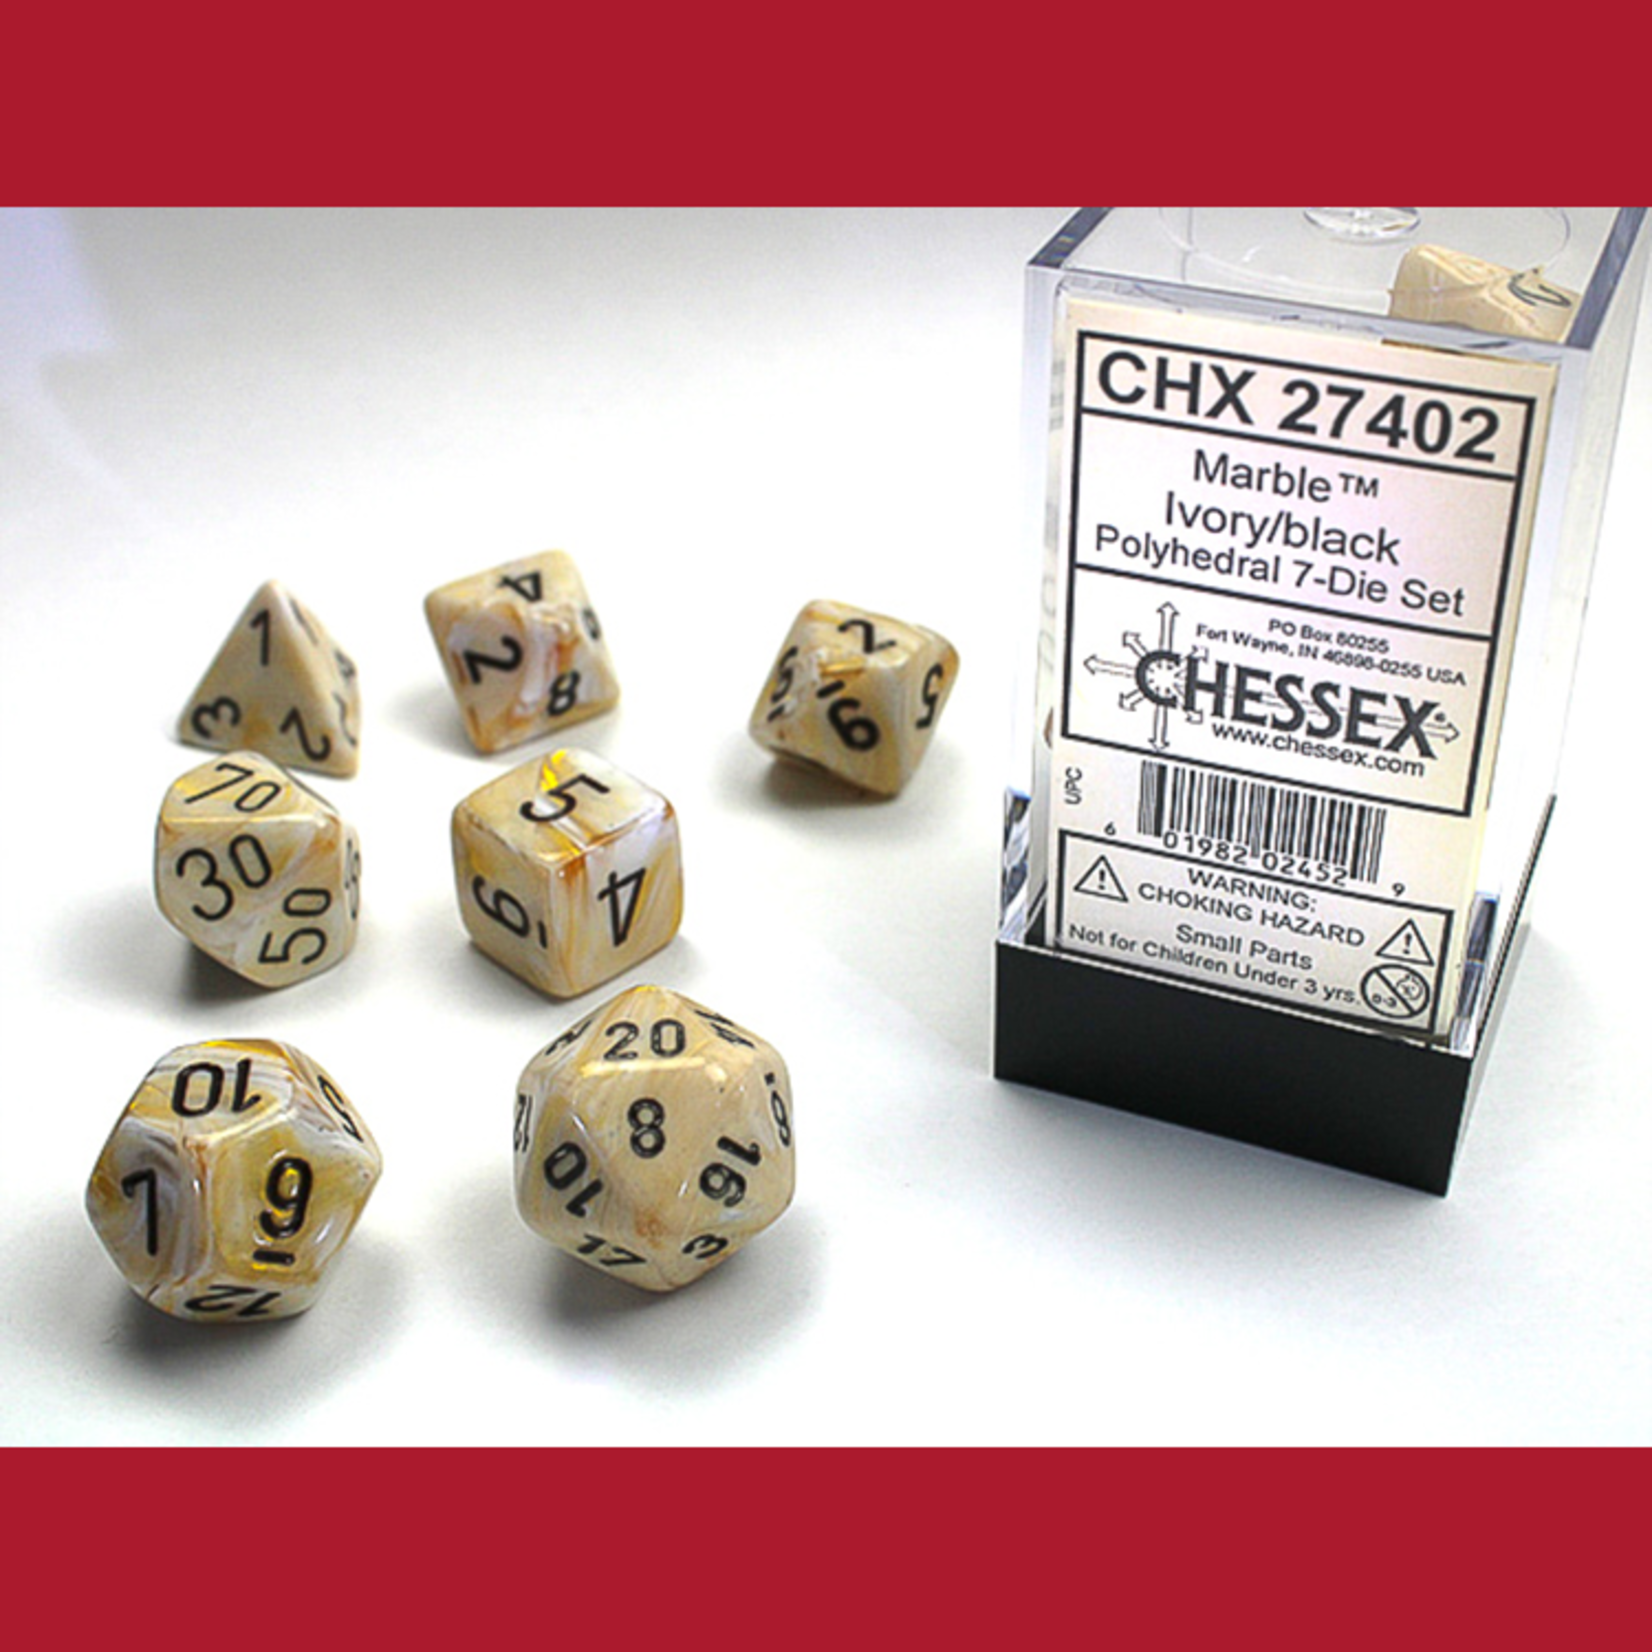 Chessex CHX 27402 Marble Ivory / Black Polyhedral 7-die Set